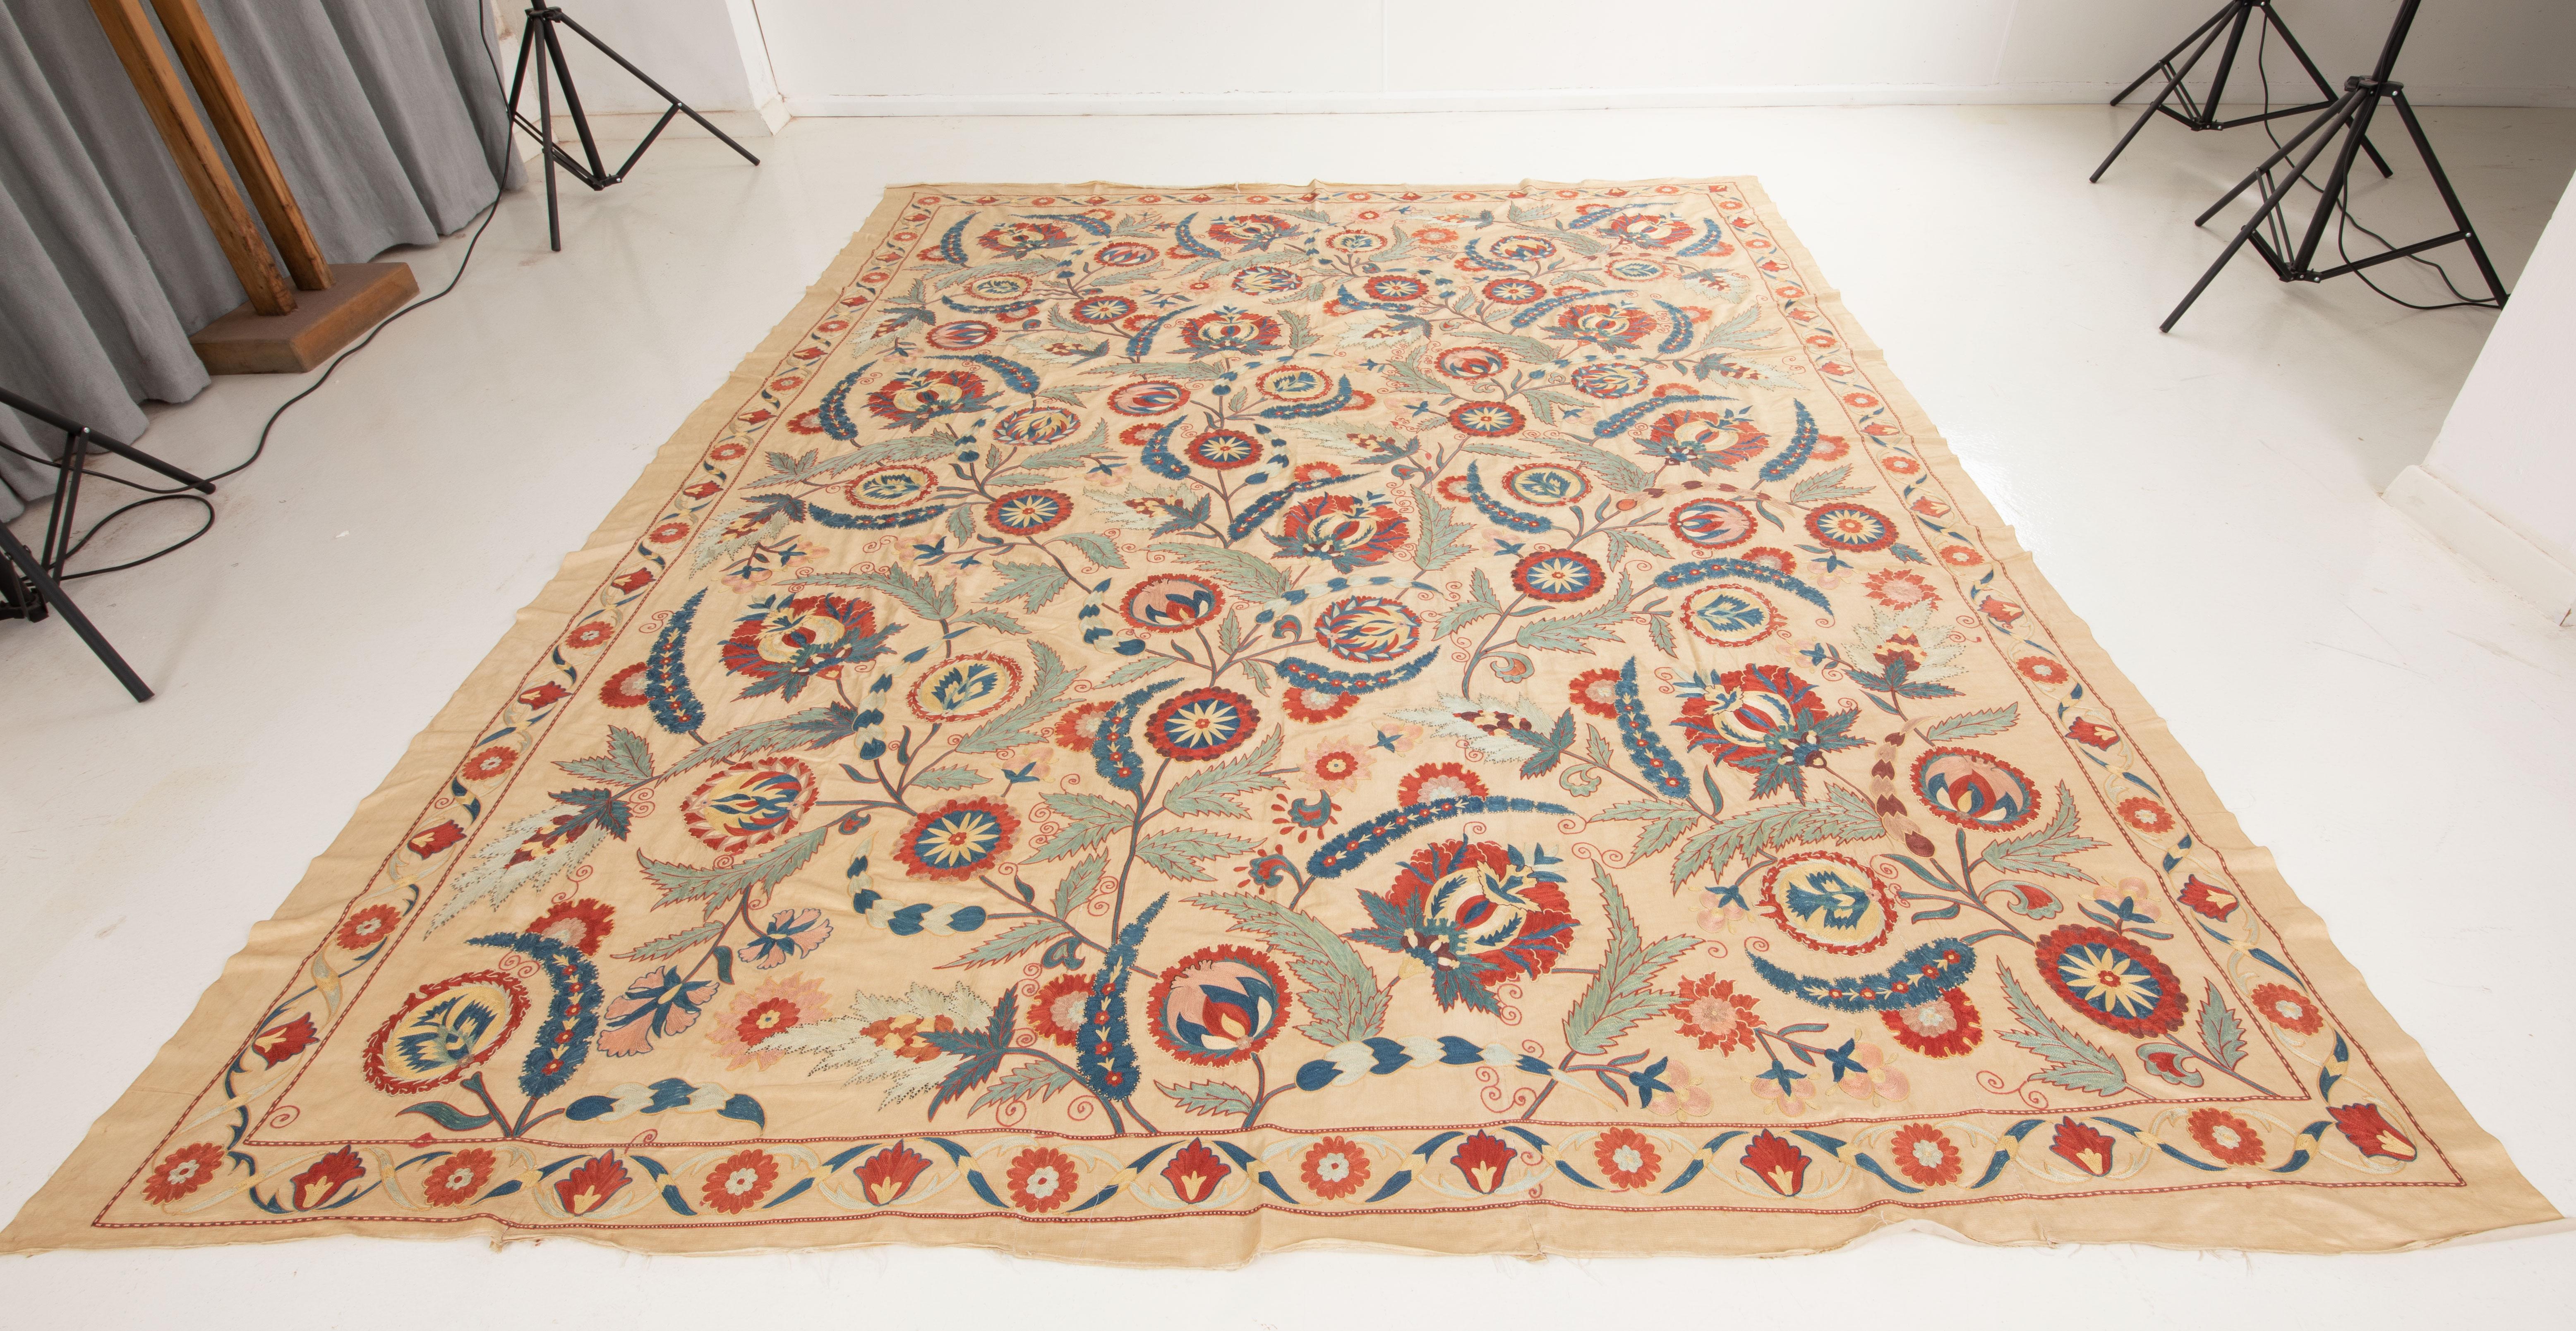 ottoman embroidery patterns